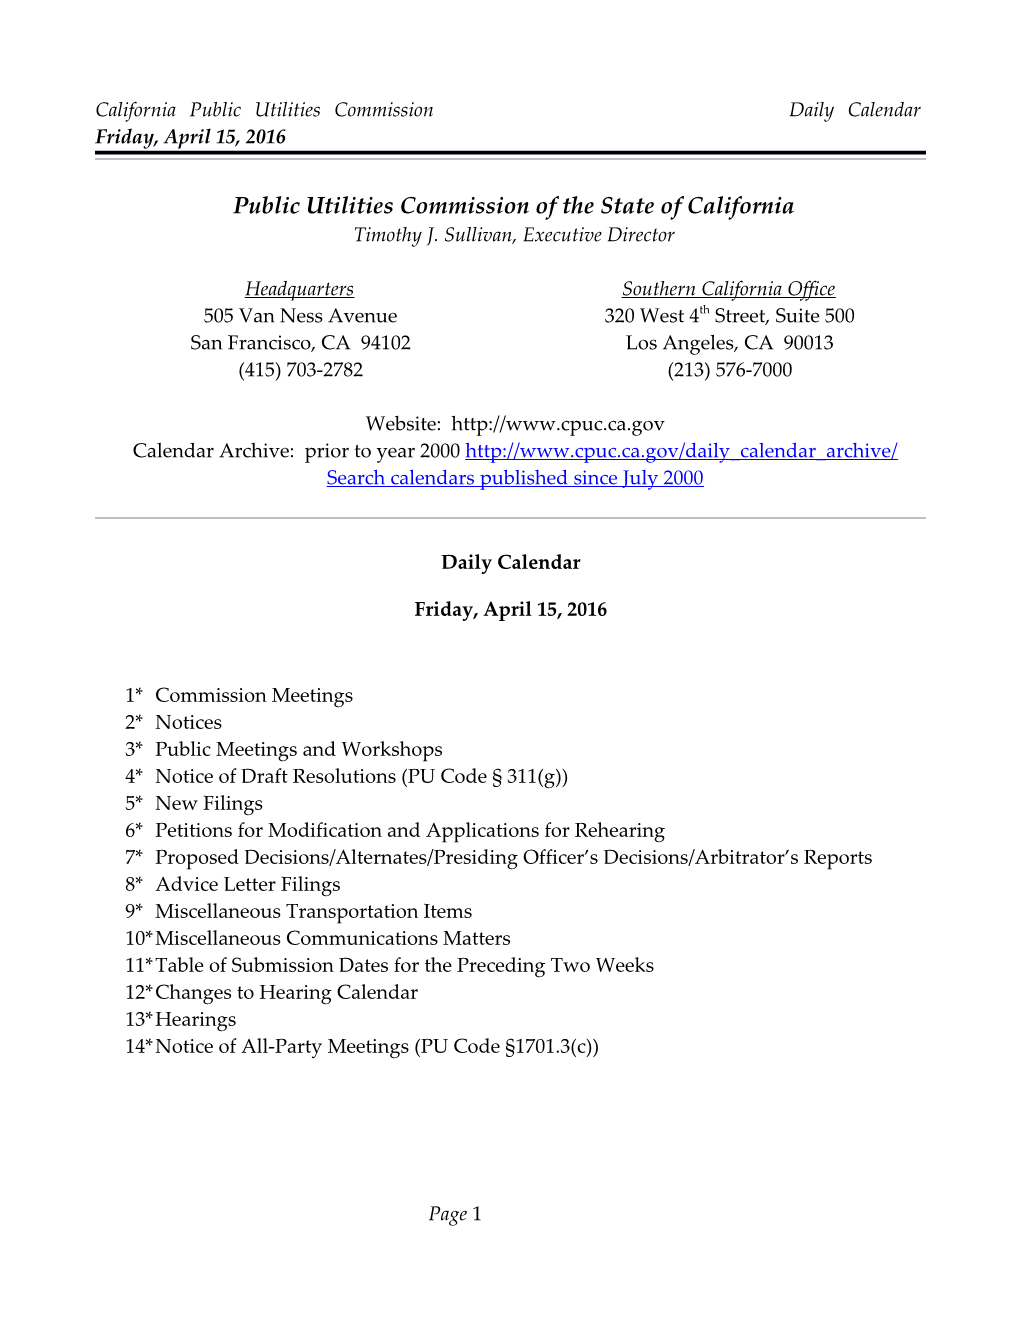 California Public Utilities Commission Daily Calendar Friday, April 15, 2016